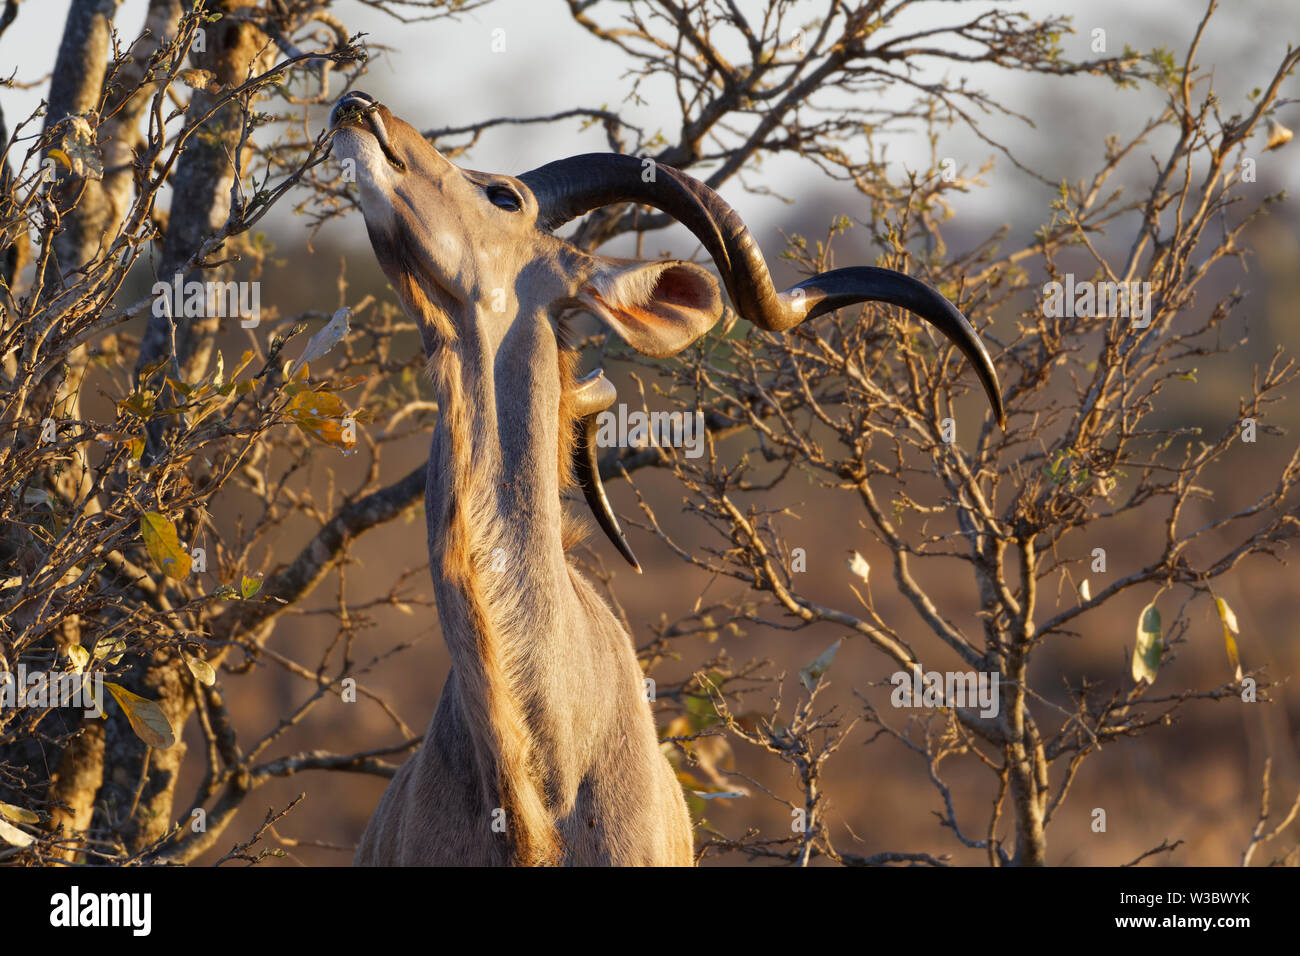 Kudu maggiore (Tragelaphus strepsiceros), maschio adulto alimentazione sulle foglie, luce della sera, Kruger National Park, Sud Africa e Africa Foto Stock